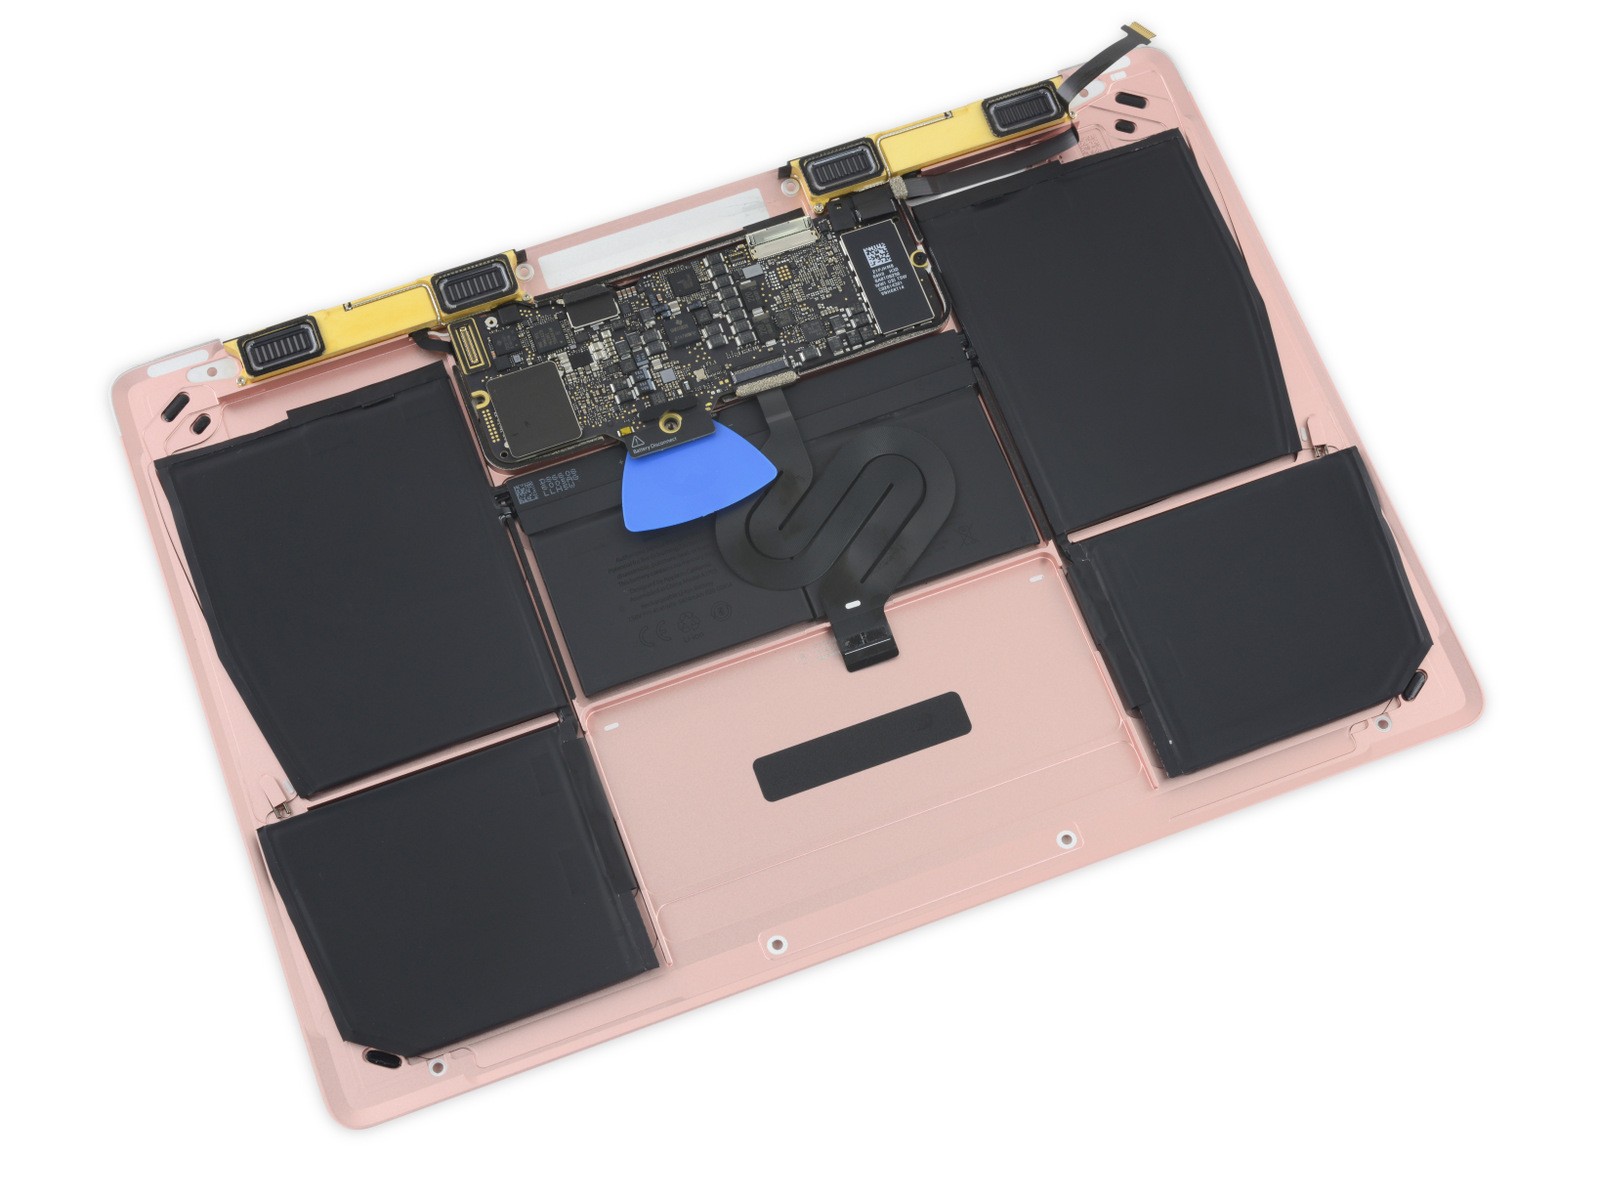 15 16 Macbook Battery Replacement Possible Macrumors Forums